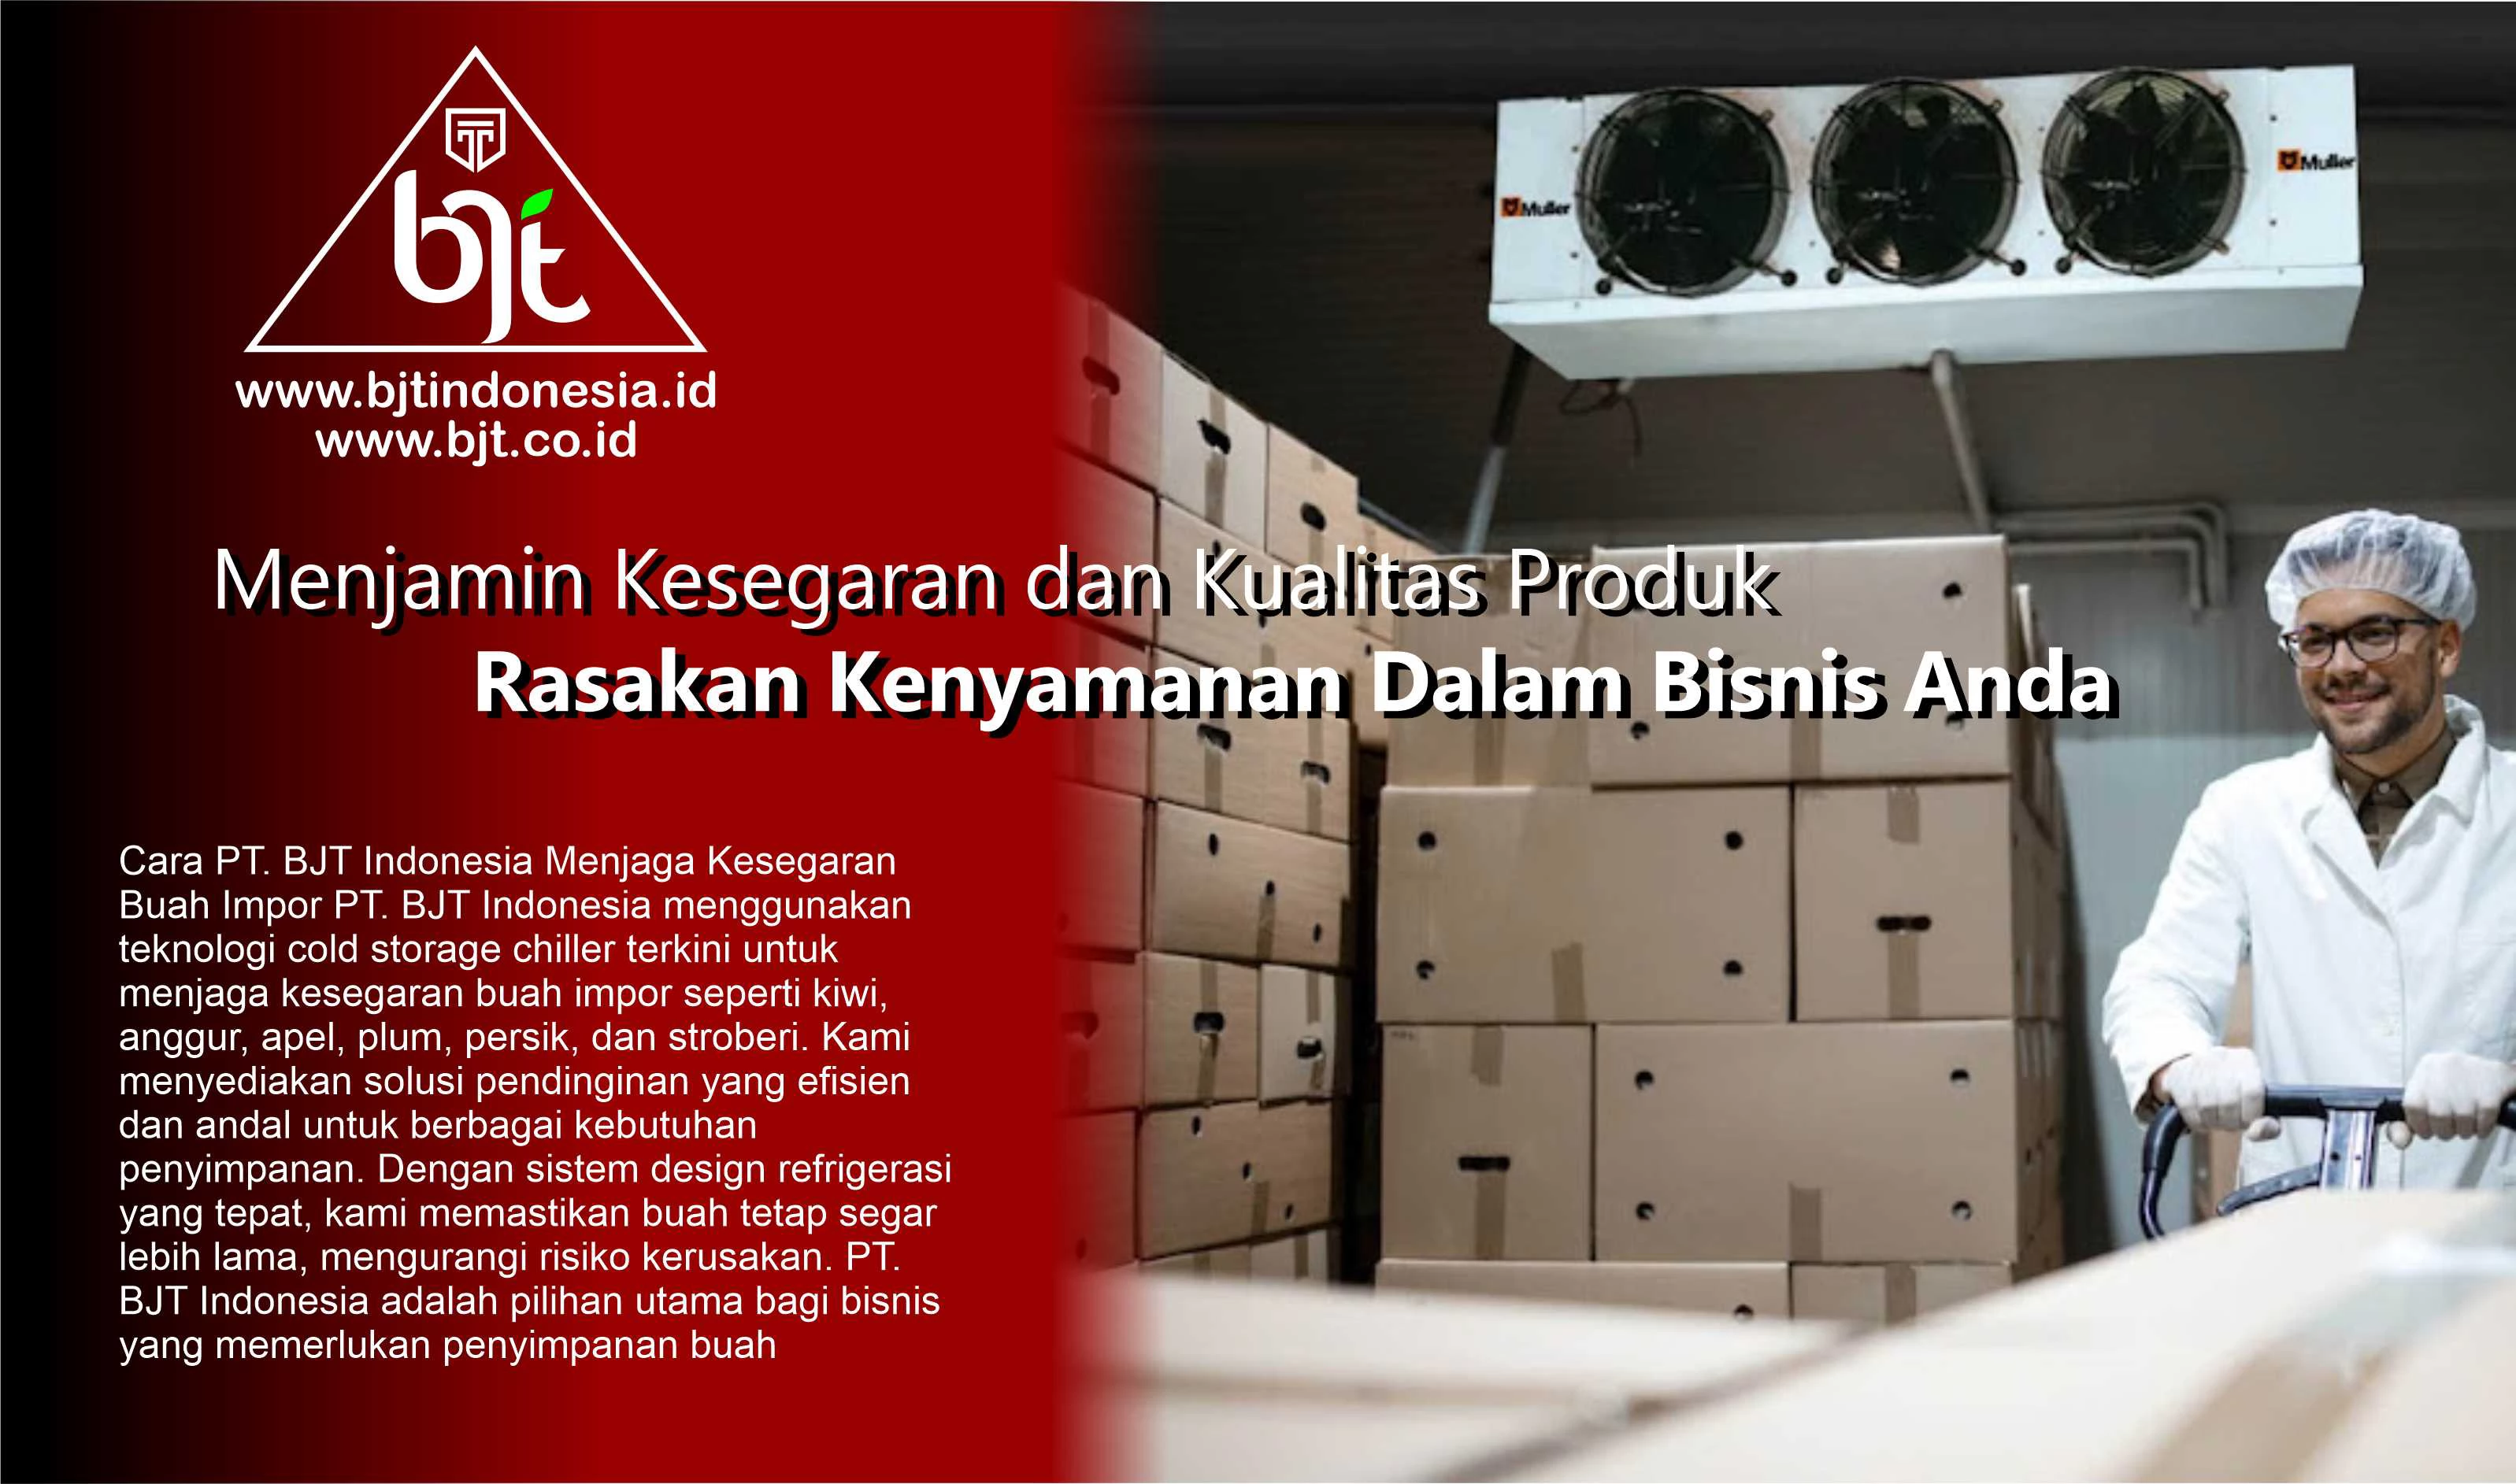 cold storage refrigeration system BJT INDONESIA